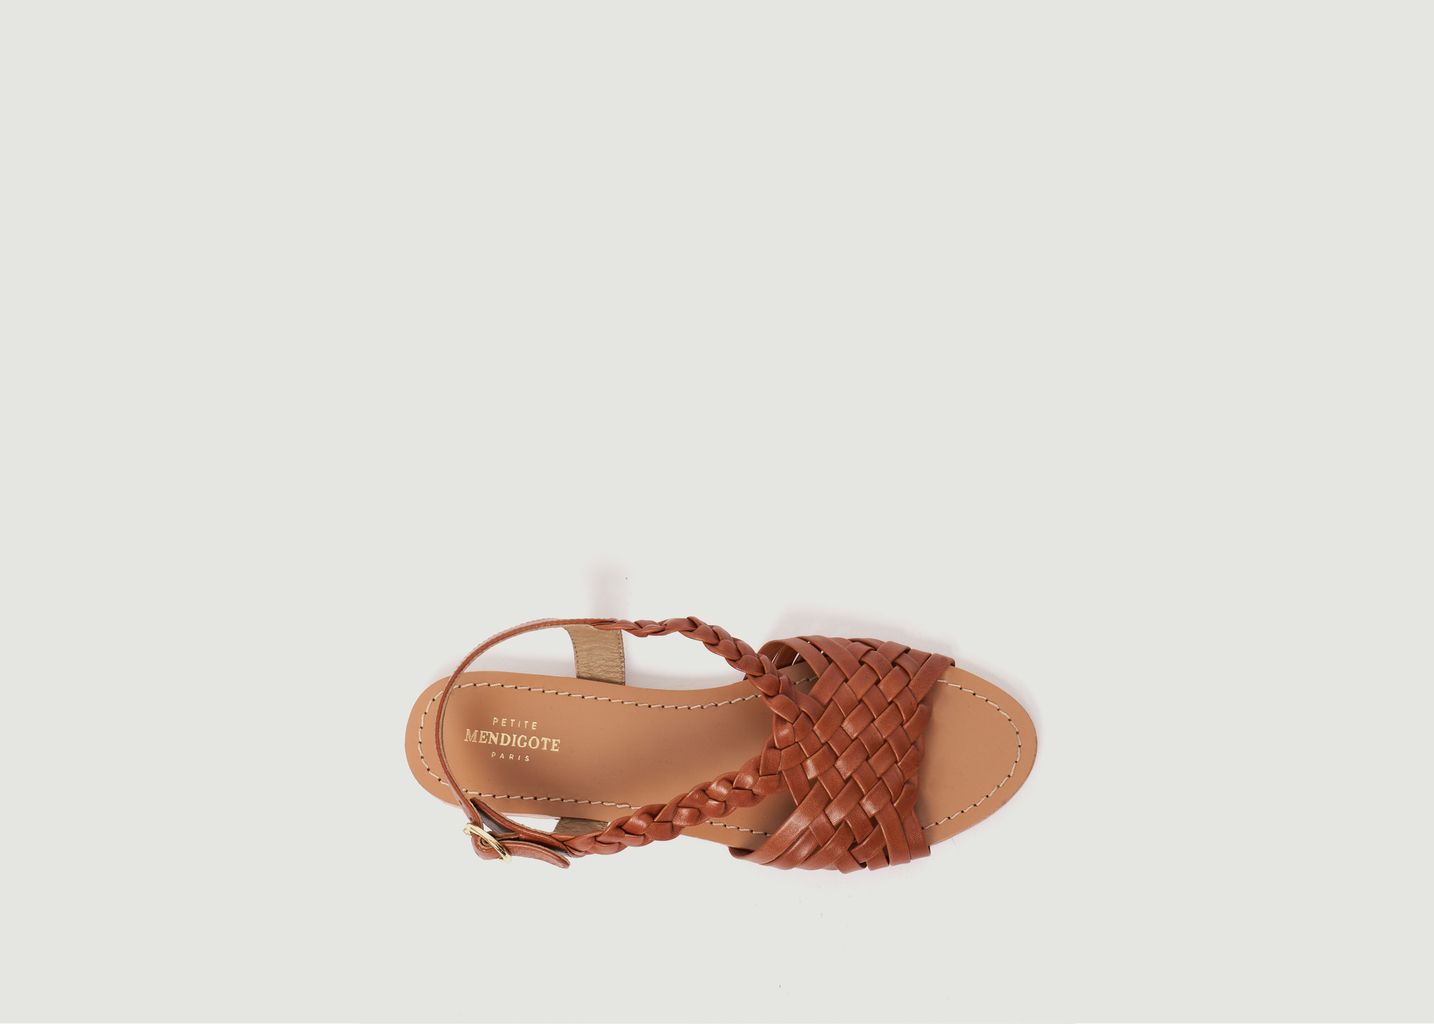 Petite Mendigote Mendy Leather Sandals